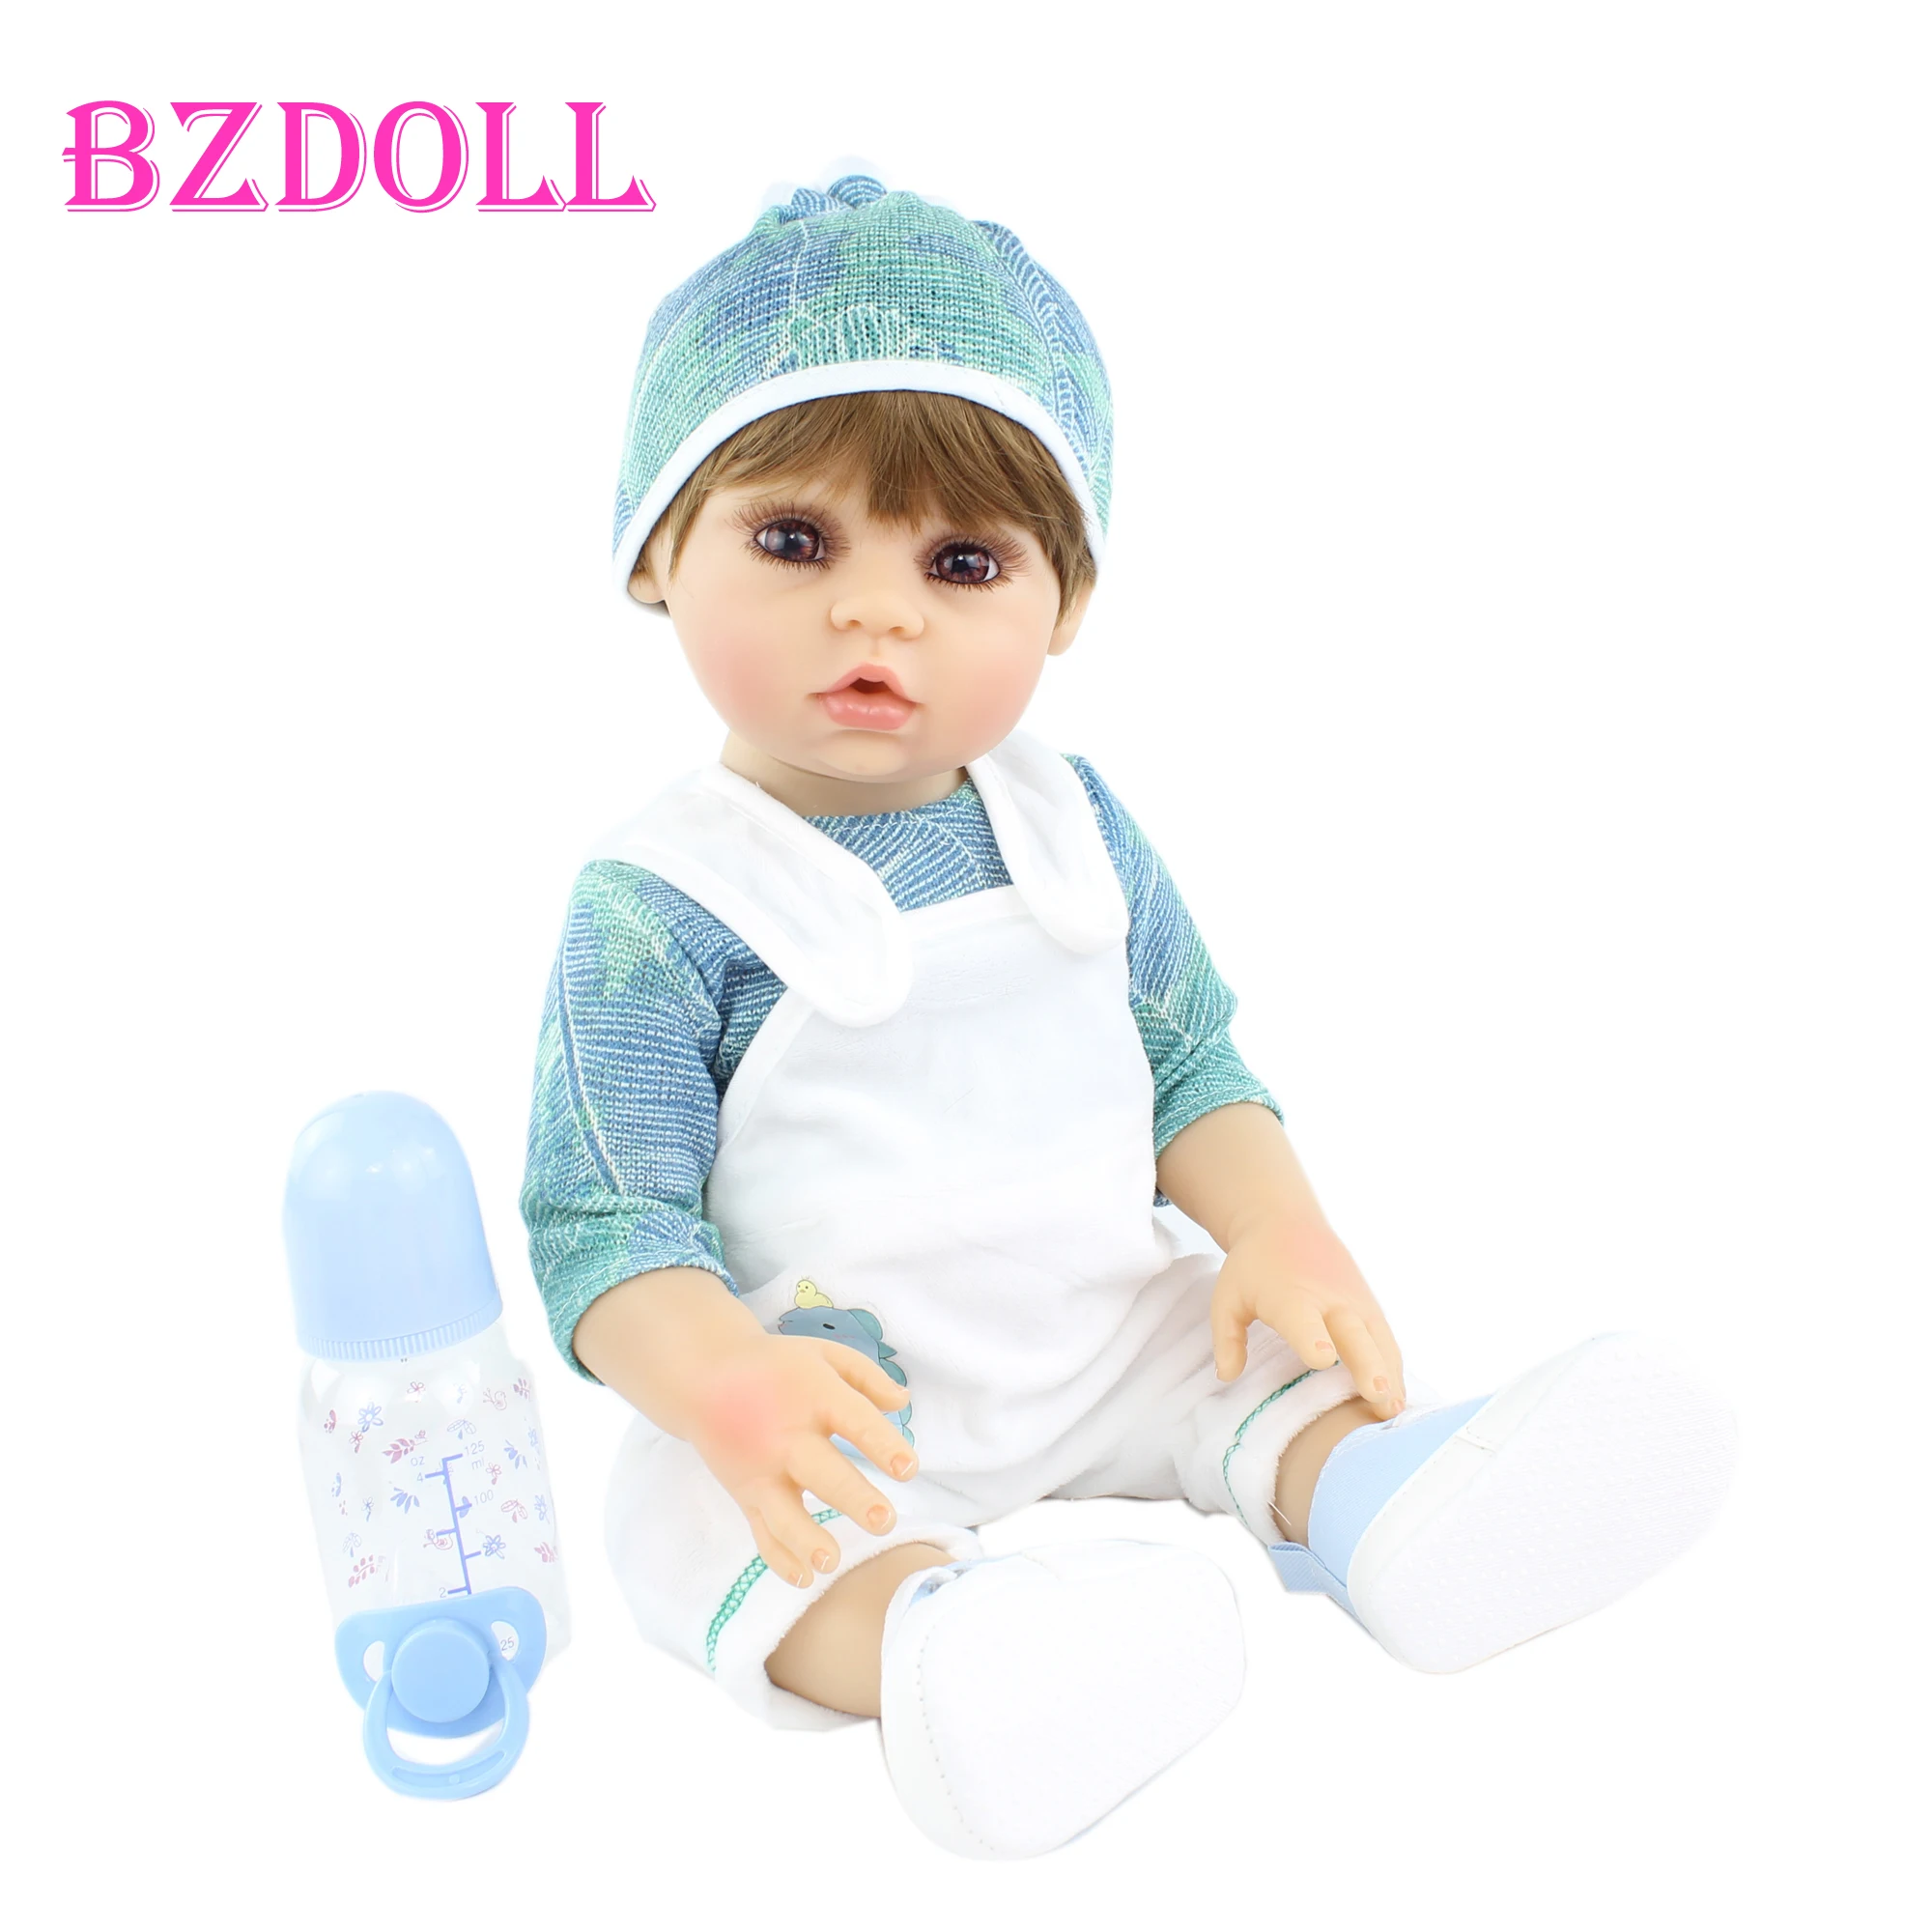 

48cm Full Silicone Body Reborn Boy Baby Doll Toys For Girl 19 inch Soft Vinyl Newborn Bebe Child Birthday Gift Play House Toy